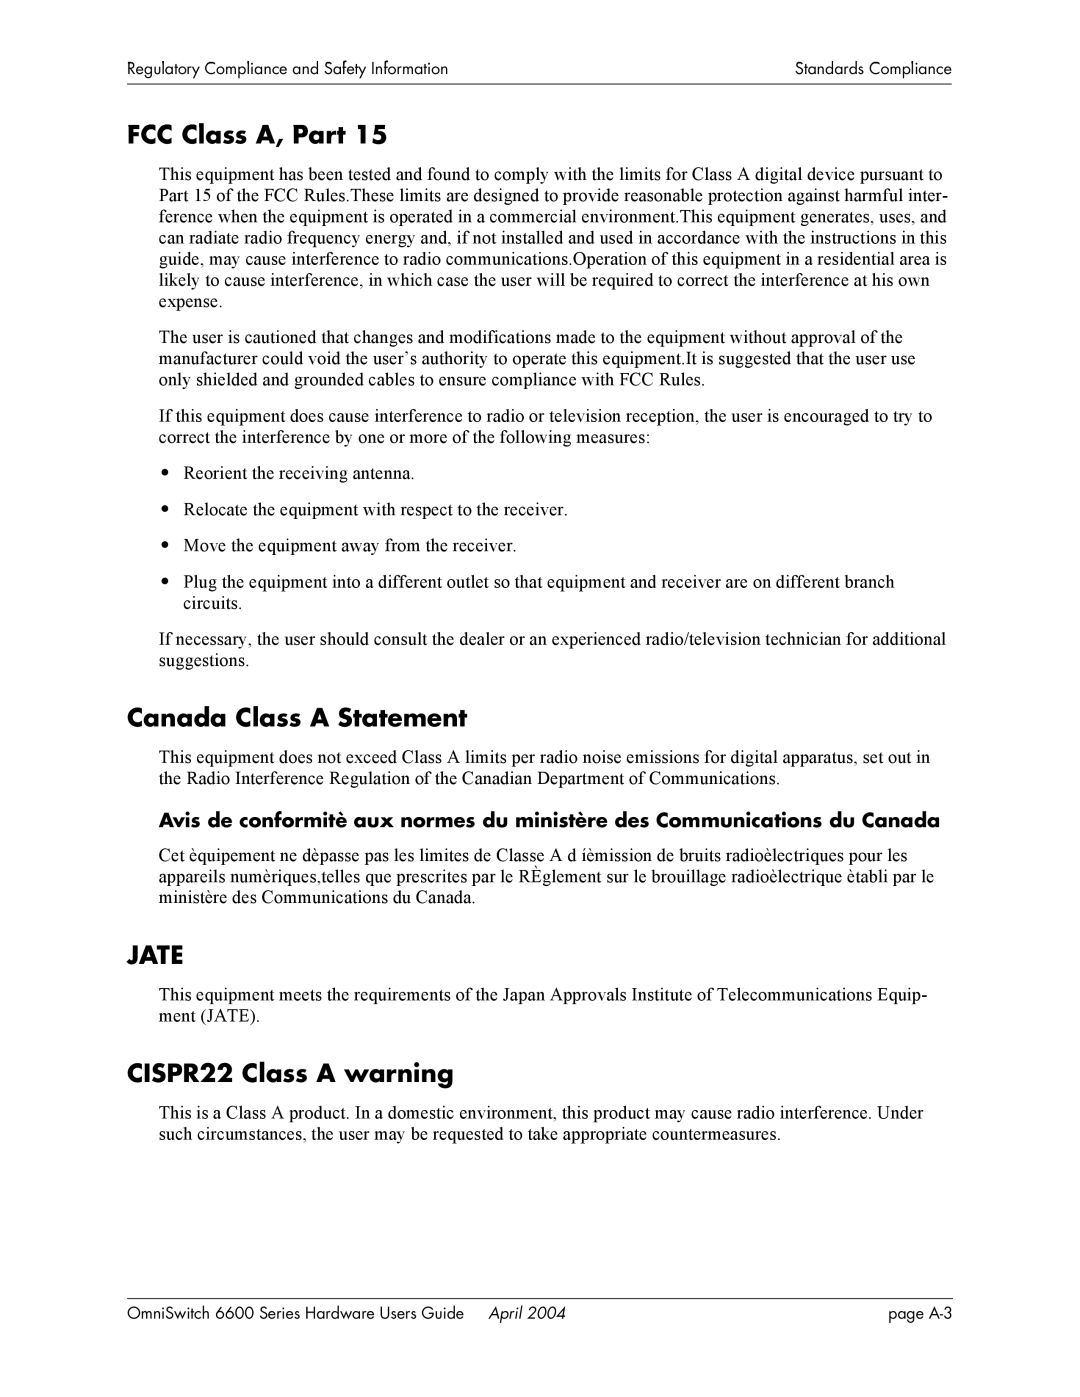 Alcatel-Lucent 6648, 6624, 6600 Series manual FCC Class A, Part, Canada Class A Statement, Jate, CISPR22 Class A warning 